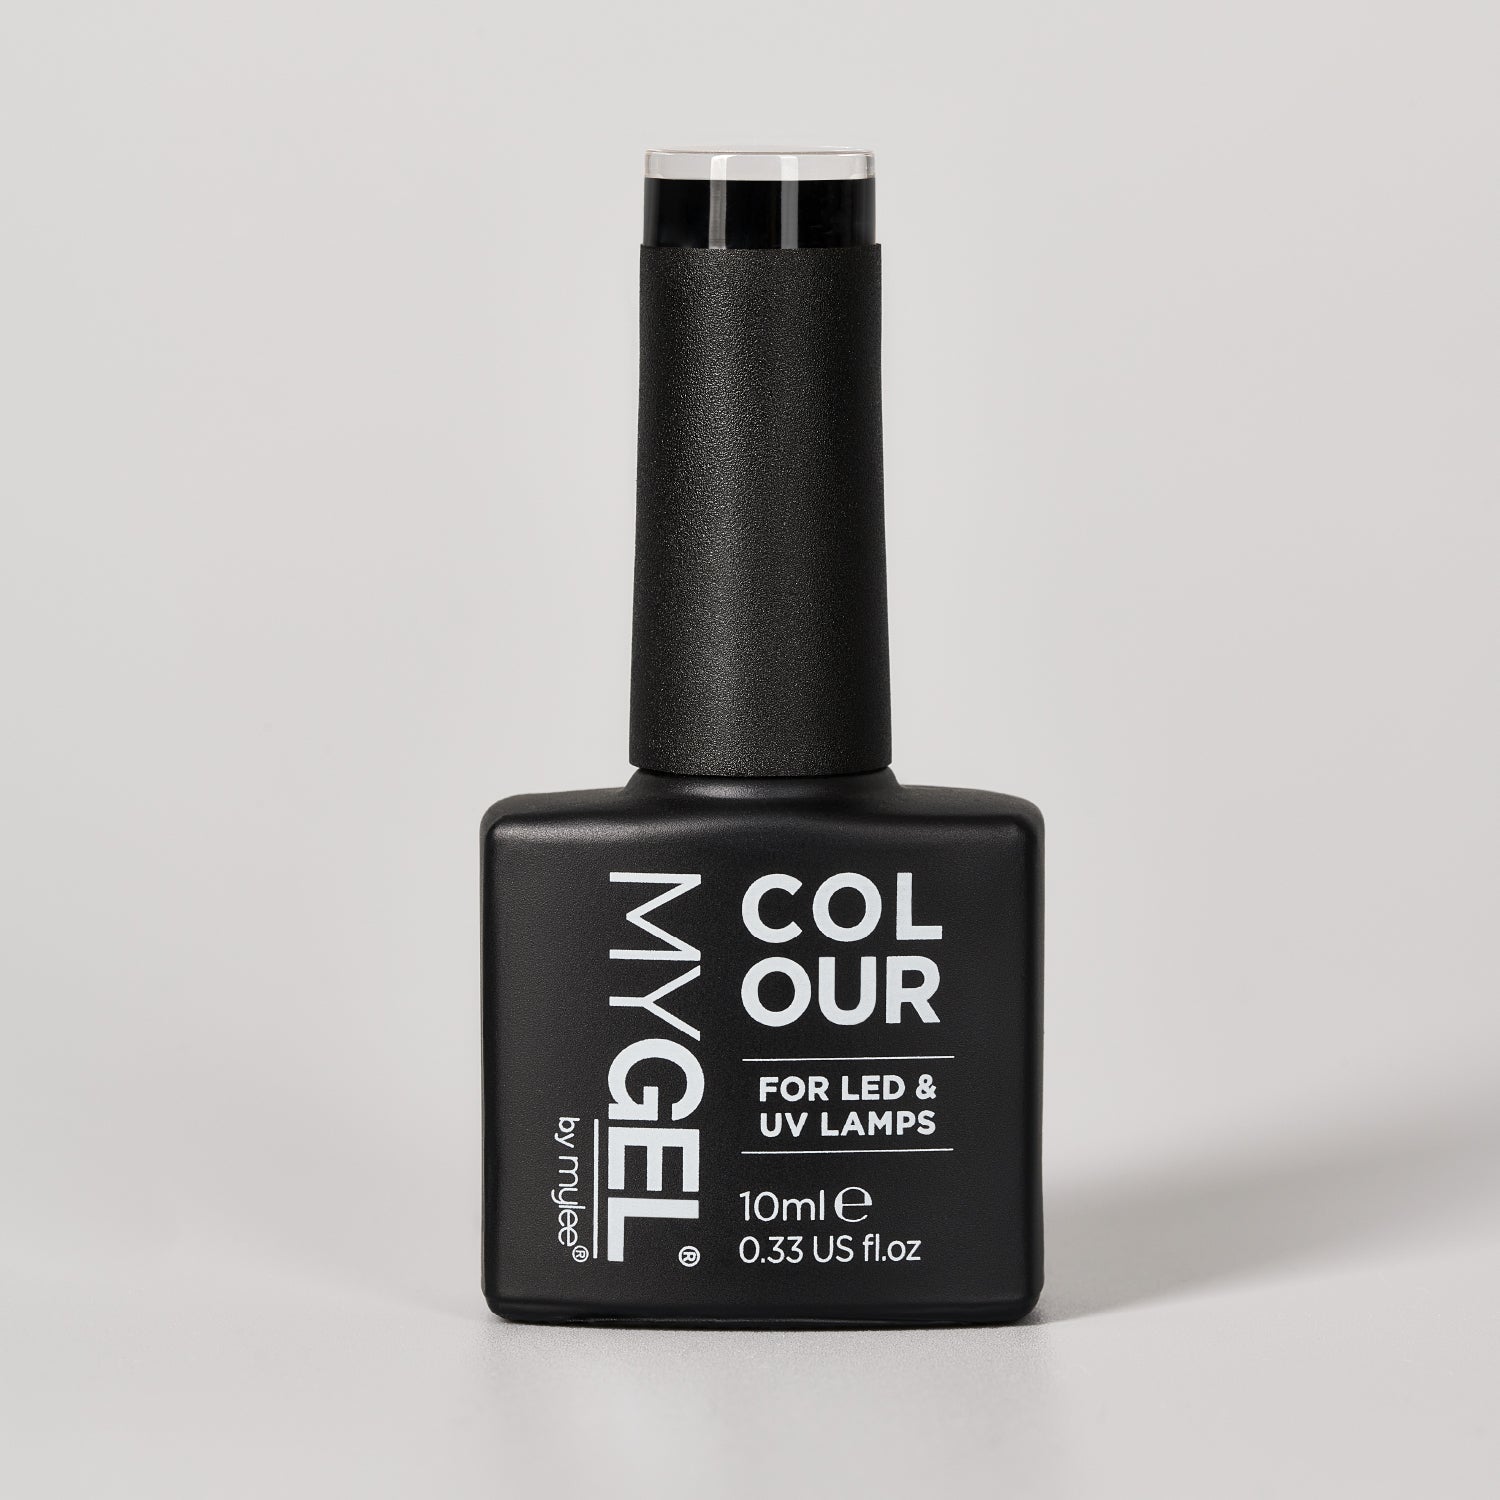 Image of Mylee Stalker LED/UV Black Gel Nail Polish 10ml – Long Lasting At Home Manicure/Pedicure, High Gloss And Chip Free Wear Nail Varnish